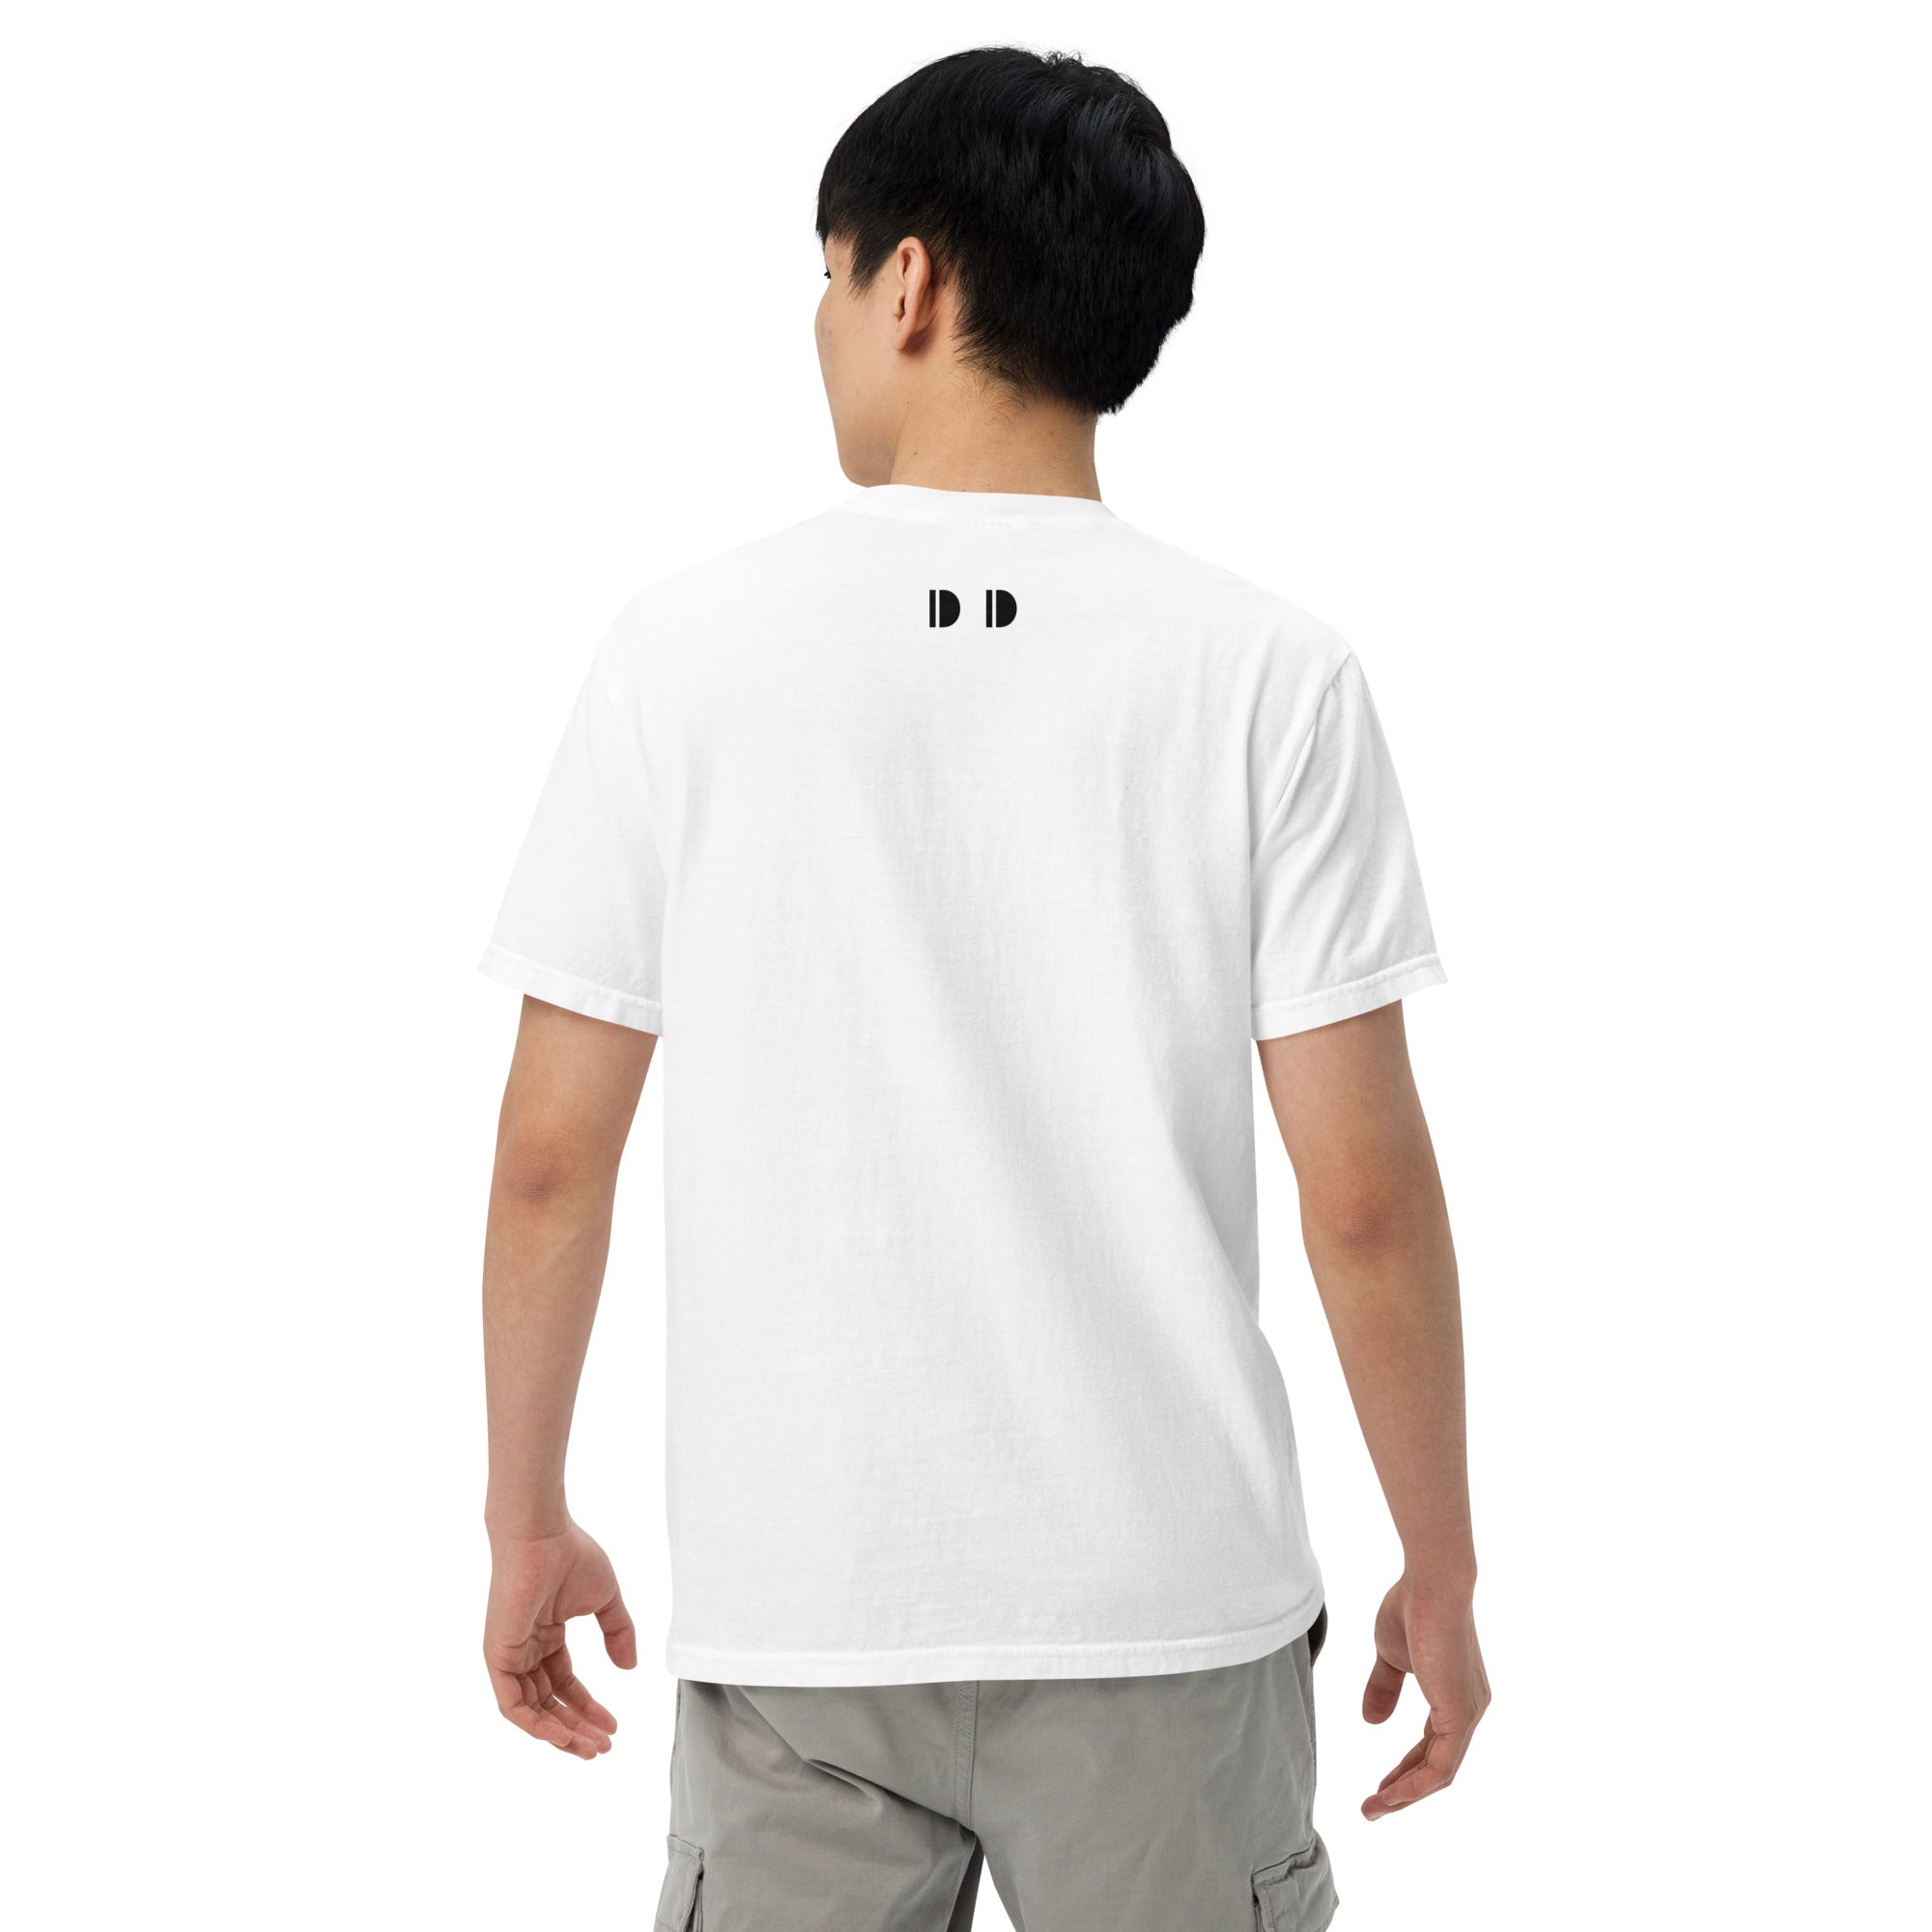 Move Change Tee - Unisex garment-dyed heavyweight t-shirt 100% Cotton